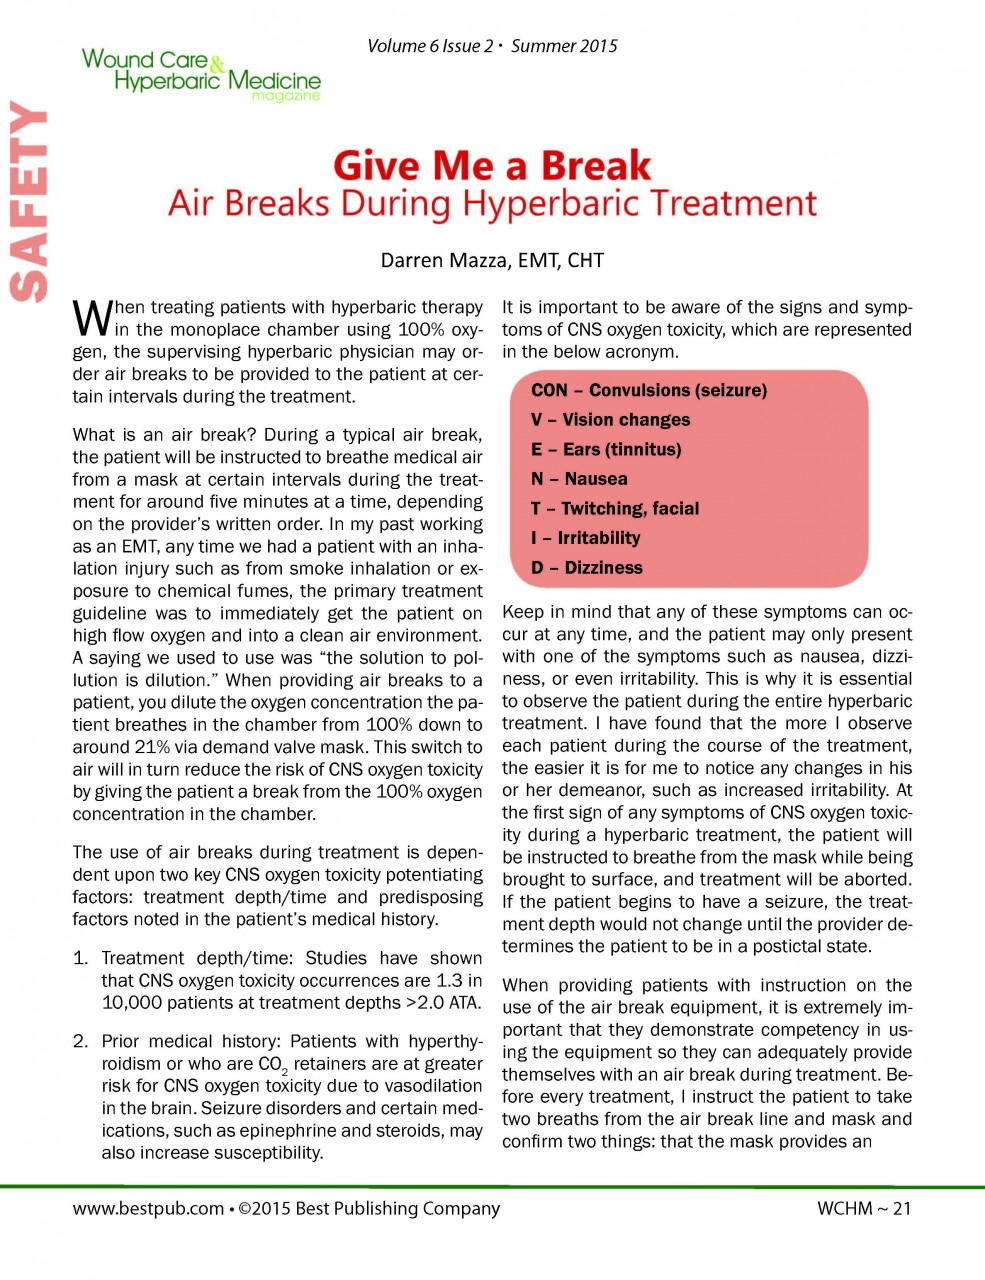 Air Breaks During Hyperbaric Treatment by Darren Mazza, EMT, CHT